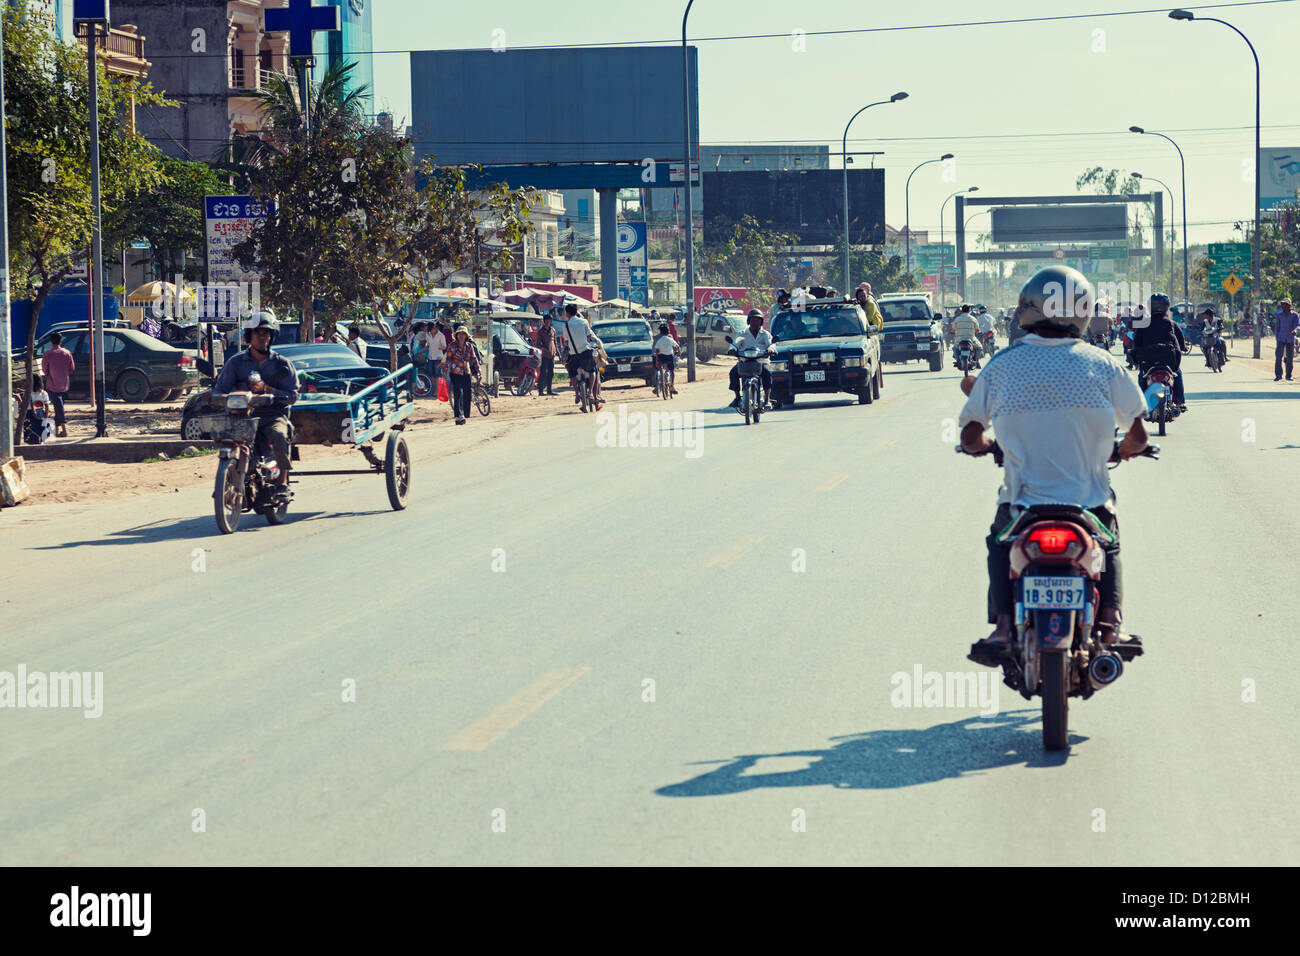 Street scene in Seam Reap, Cambodia Stock Photo